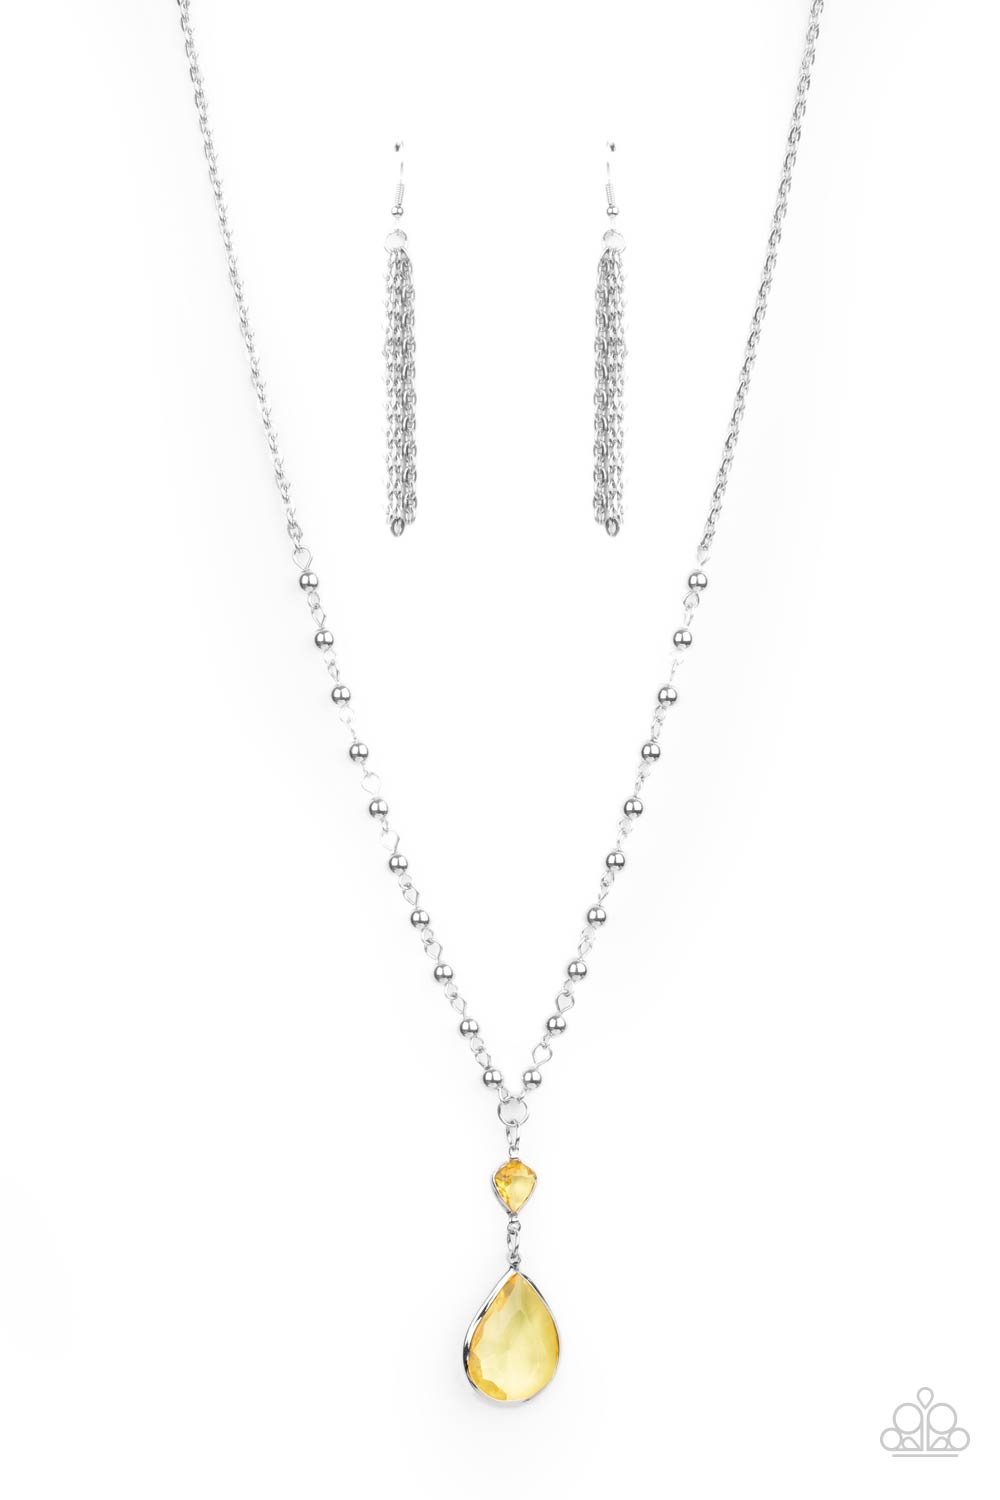 Titanic Splendor Yellow Gem Necklace - Paparazzi Accessories- lightbox - CarasShop.com - $5 Jewelry by Cara Jewels